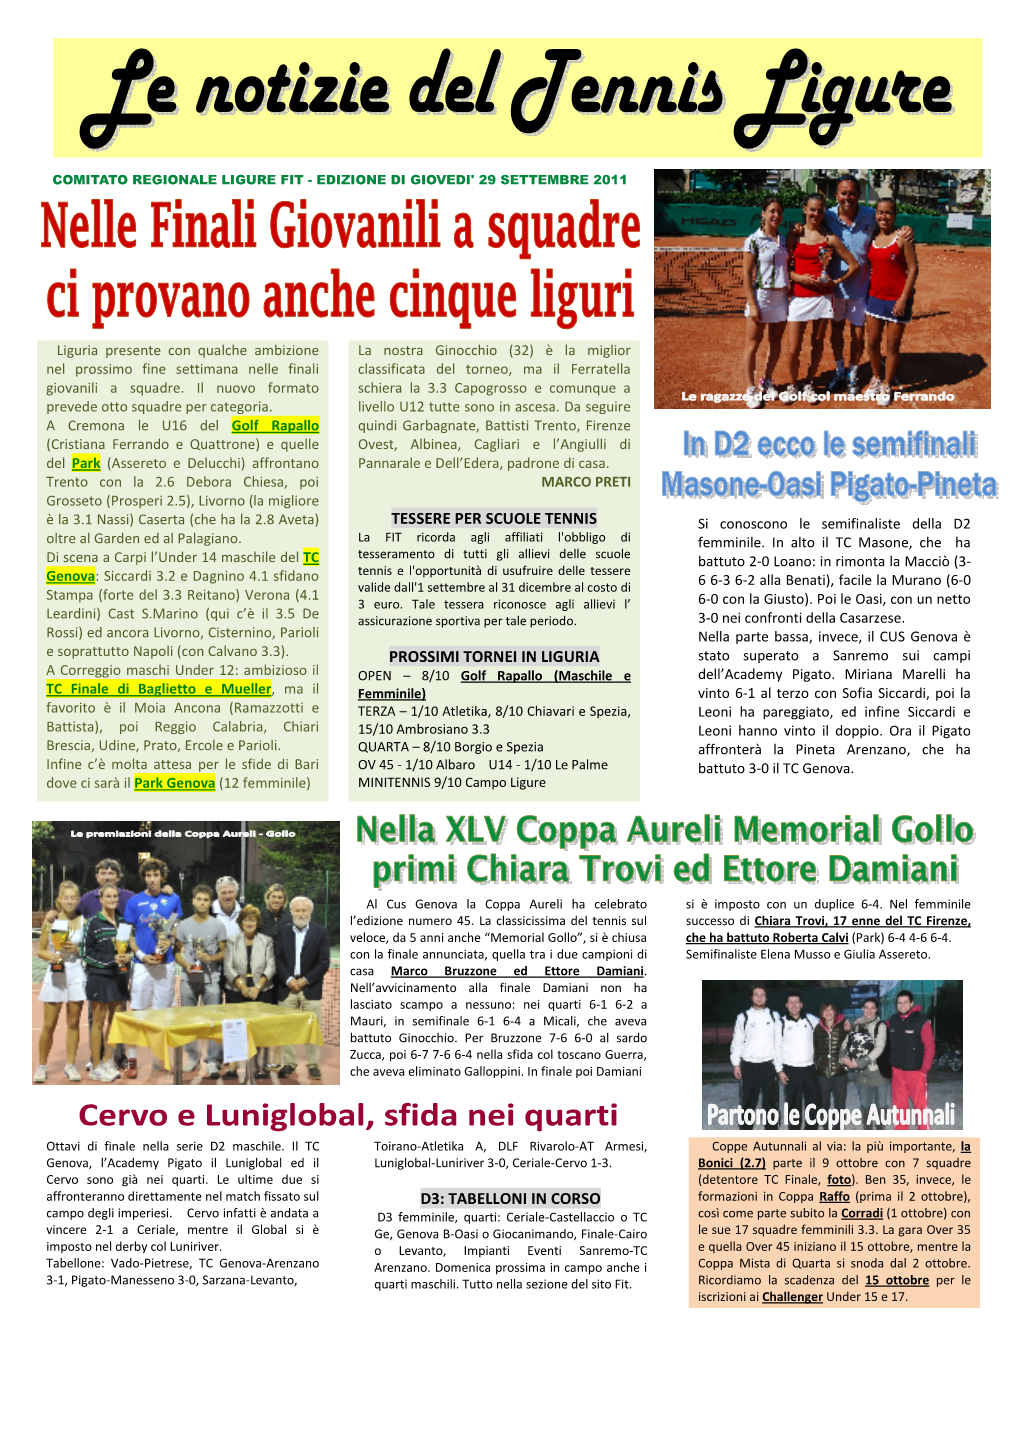 Tessere Per Scuole Tennis Prossimi Tornei in Liguria D3